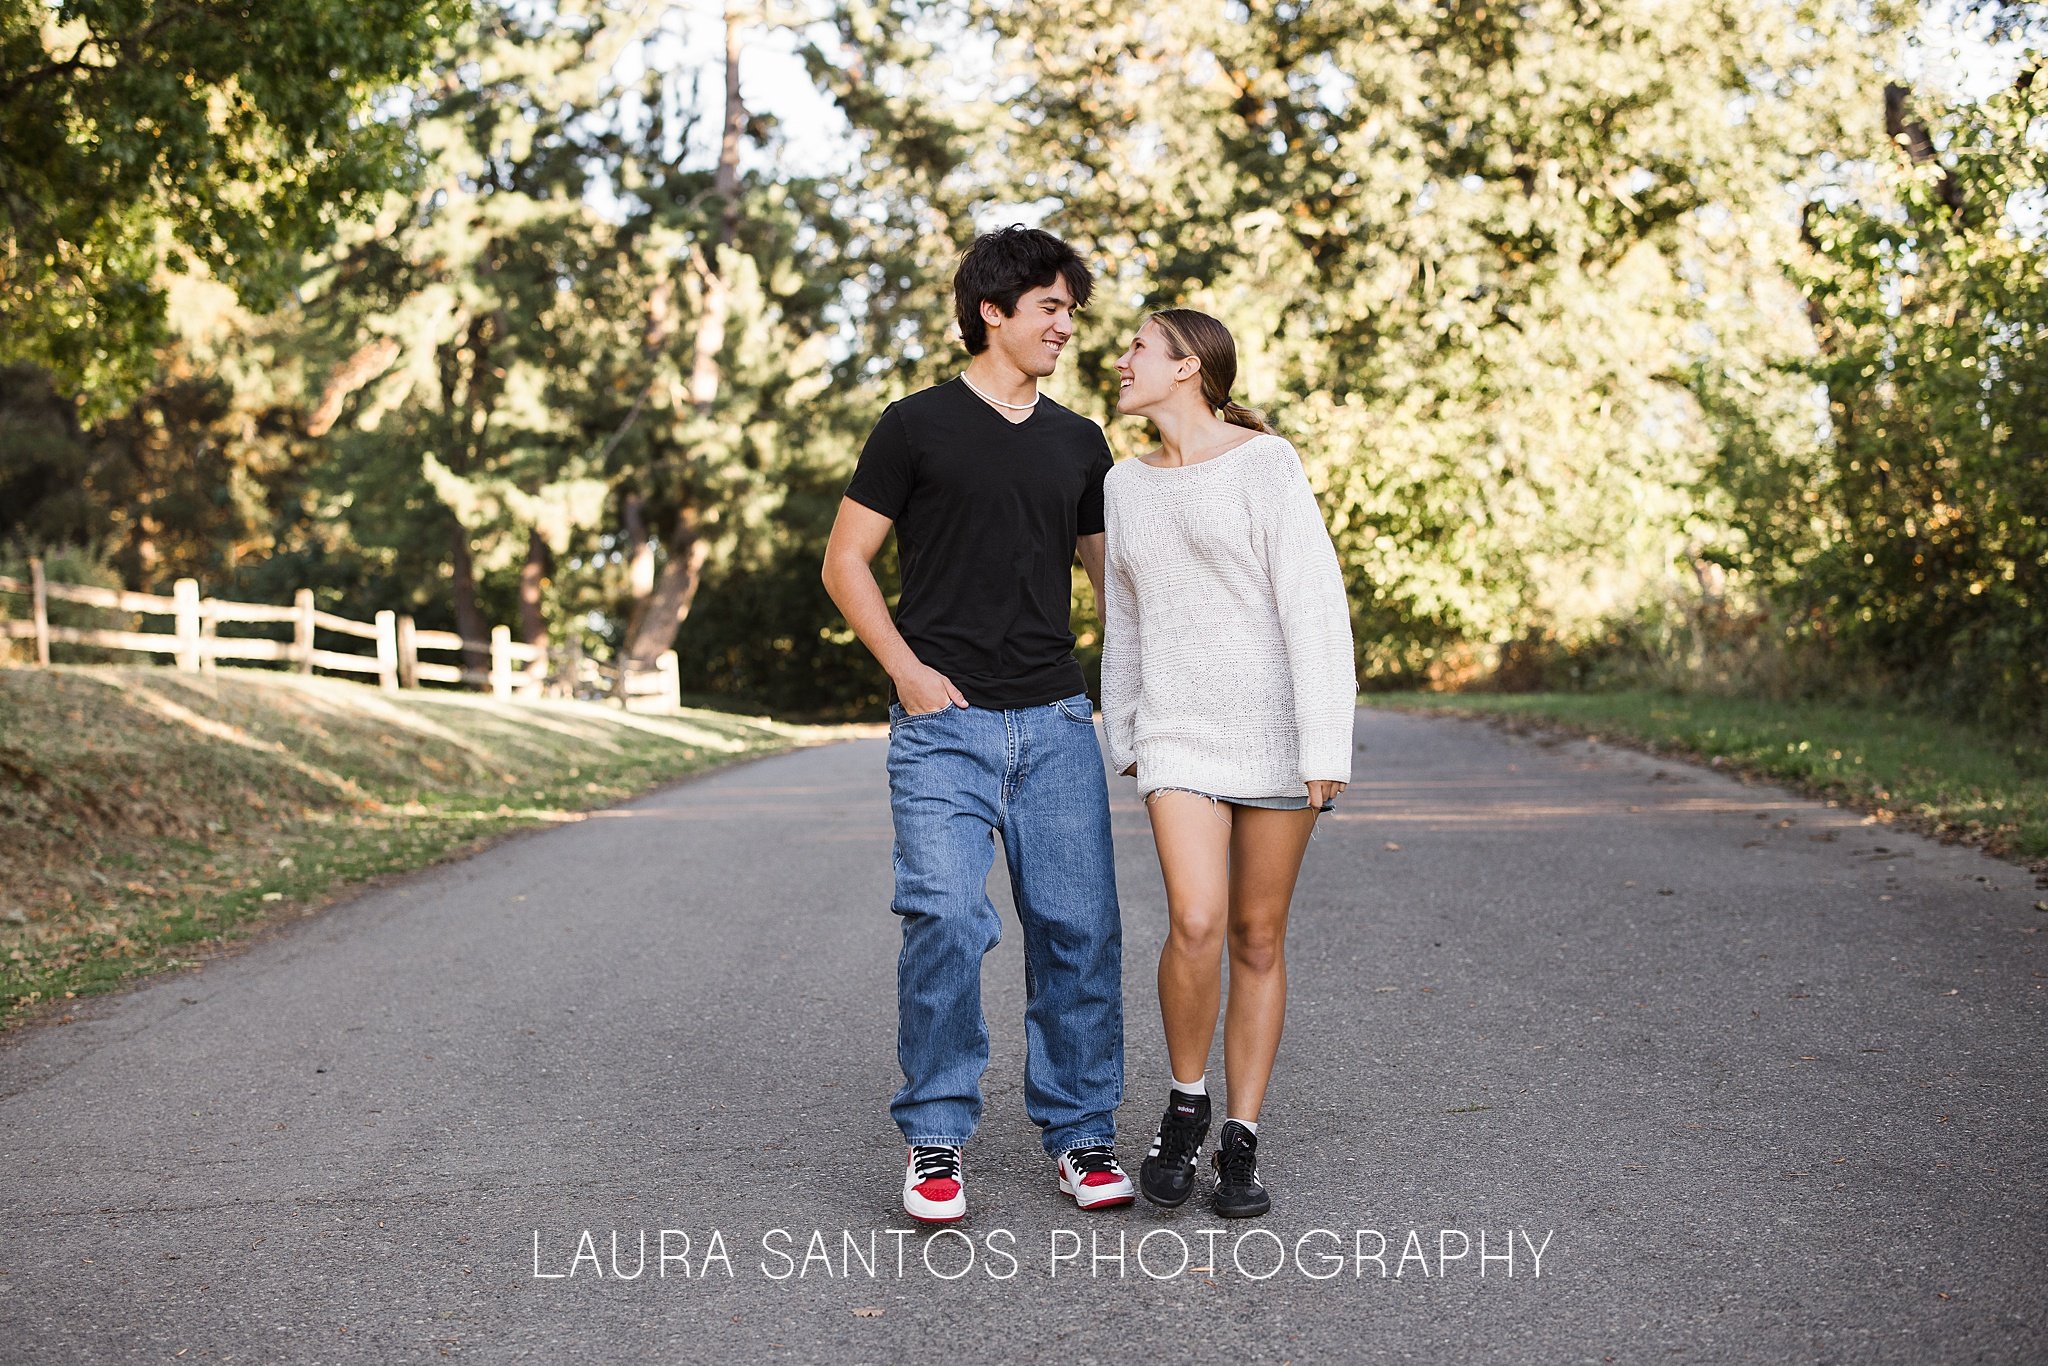 Laura Santos Photography Portland Oregon Family Photographer_4860.jpg